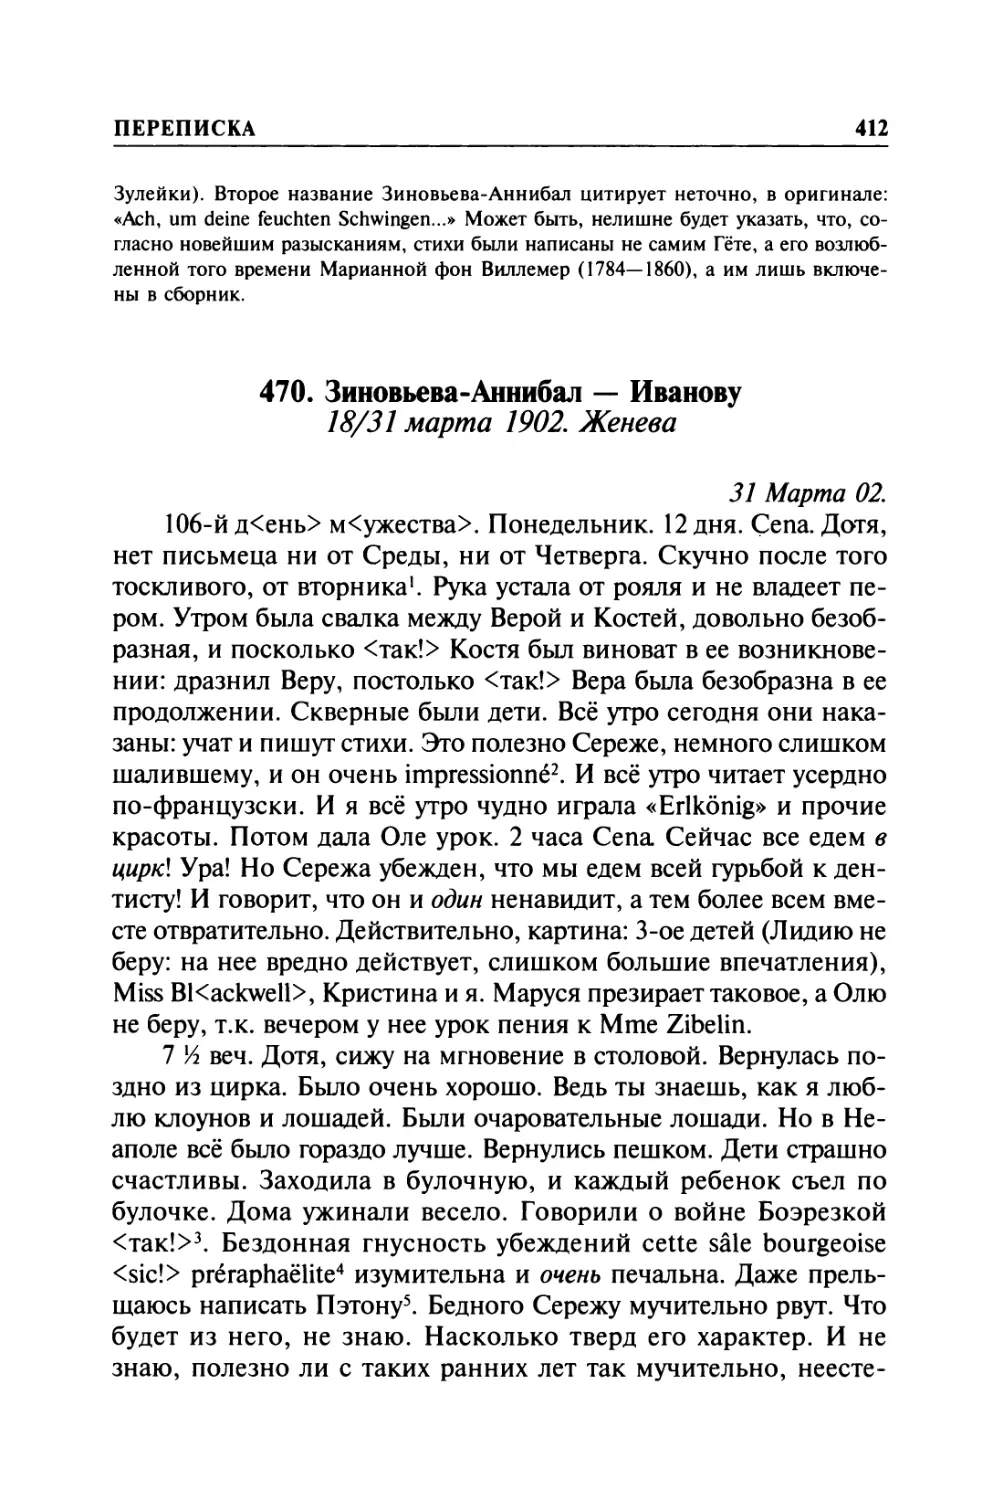 470. Зиновьева-Аннибал — Иванову. 18/31 марта 1902. Женева